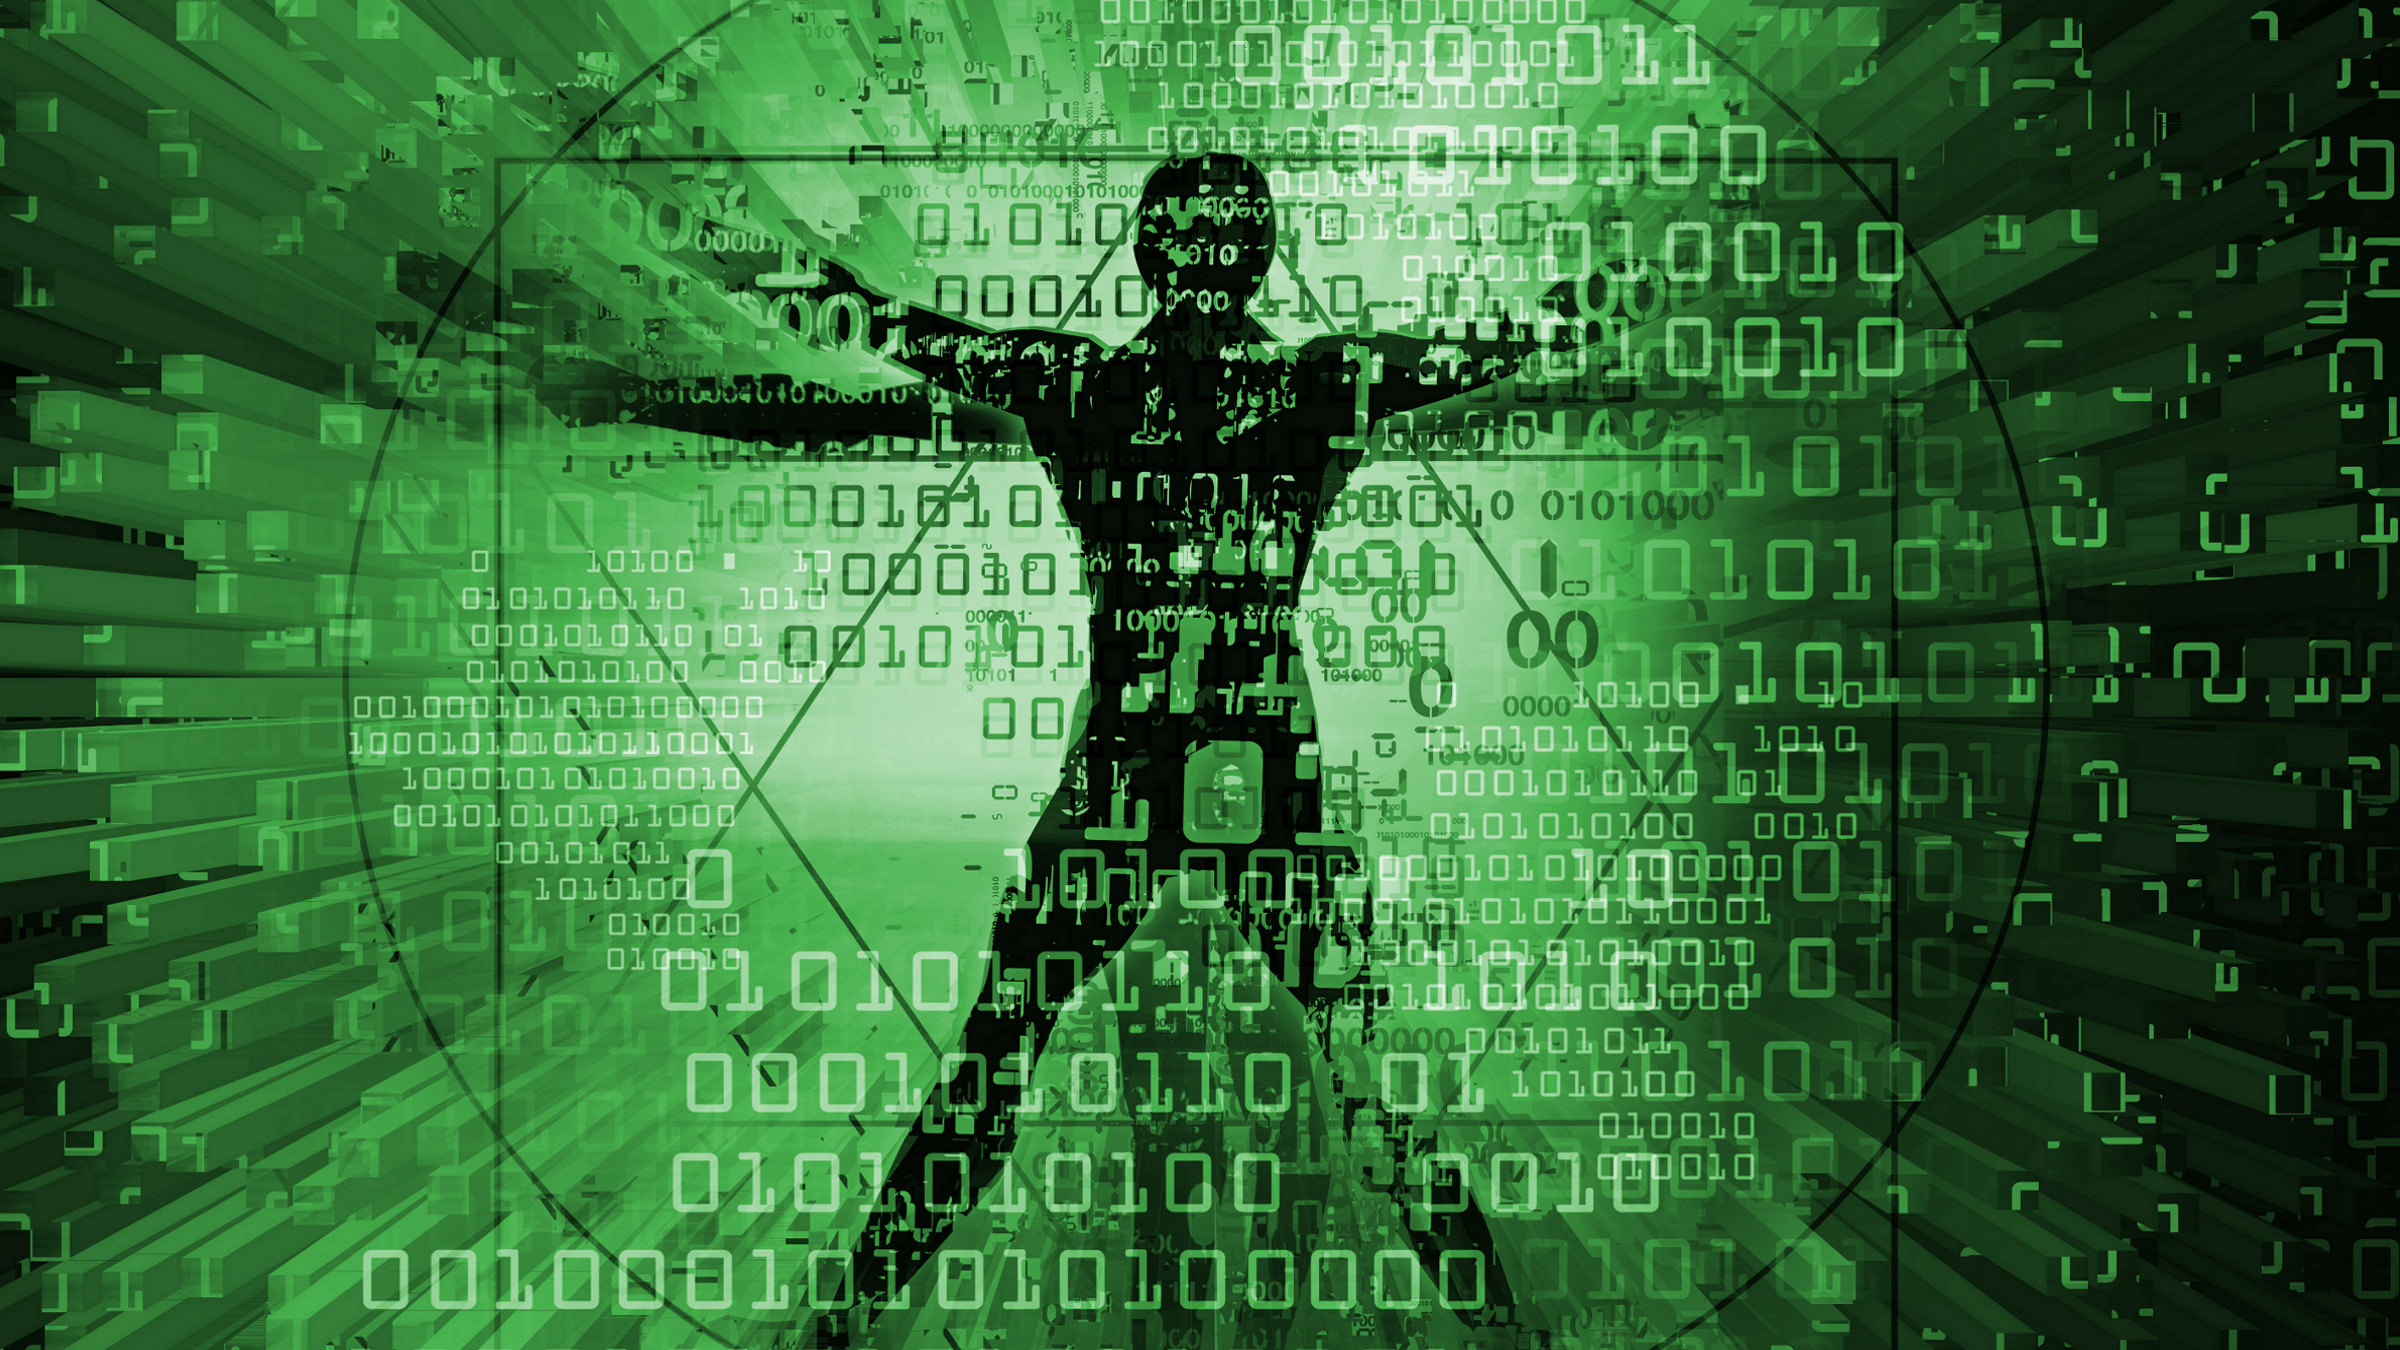 vitruvian man on green binary code background, illustration